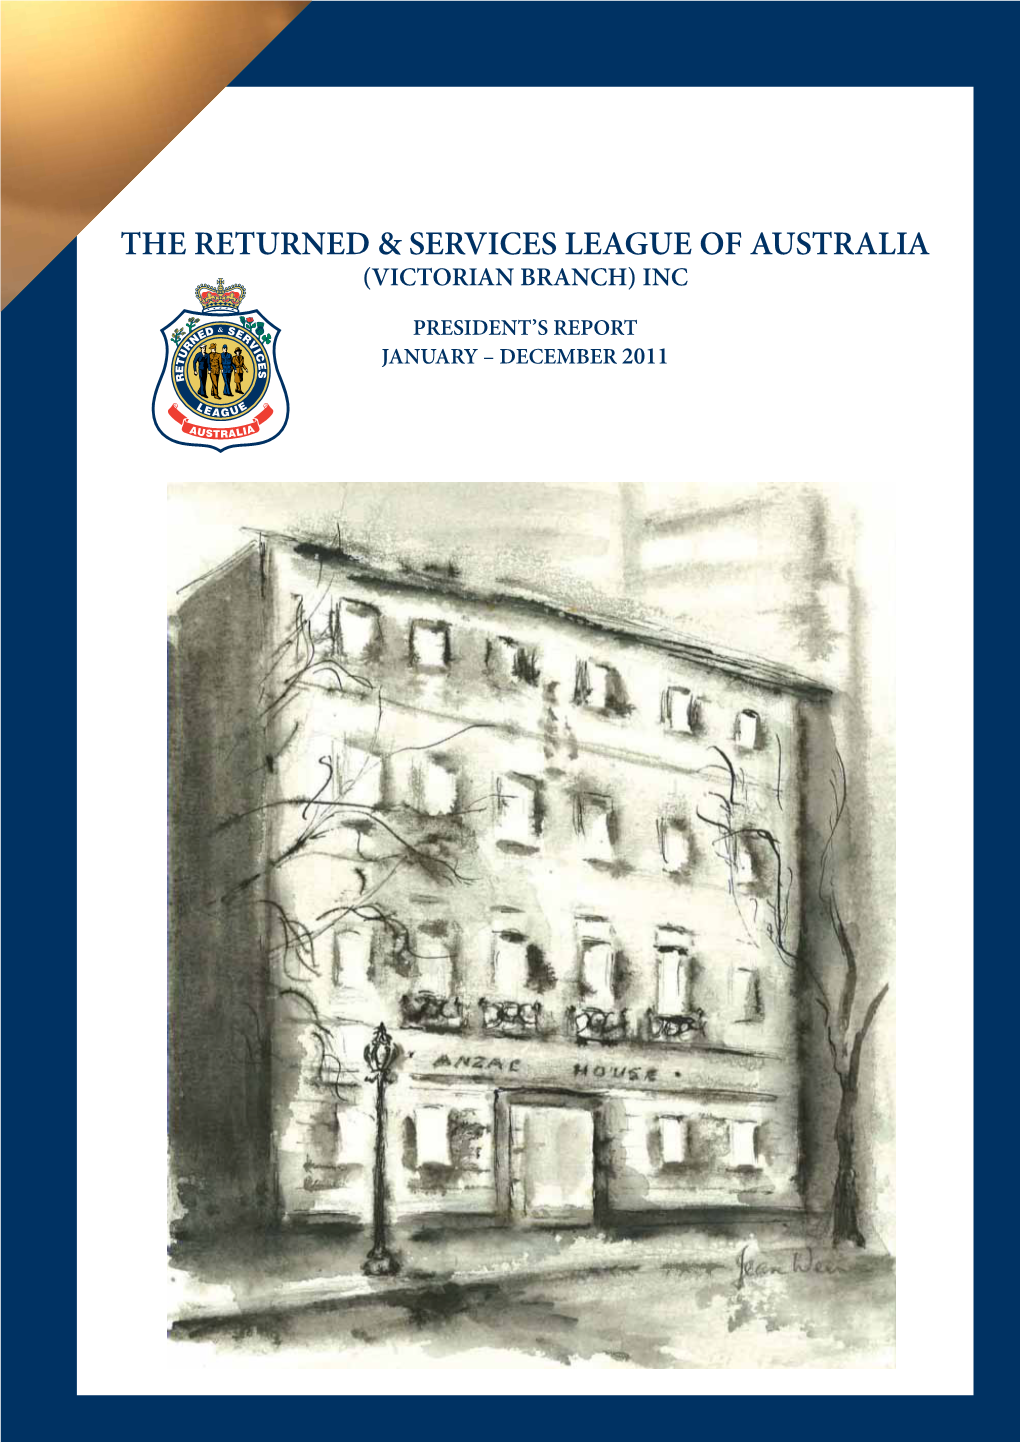 The Returned & Services League of Australia